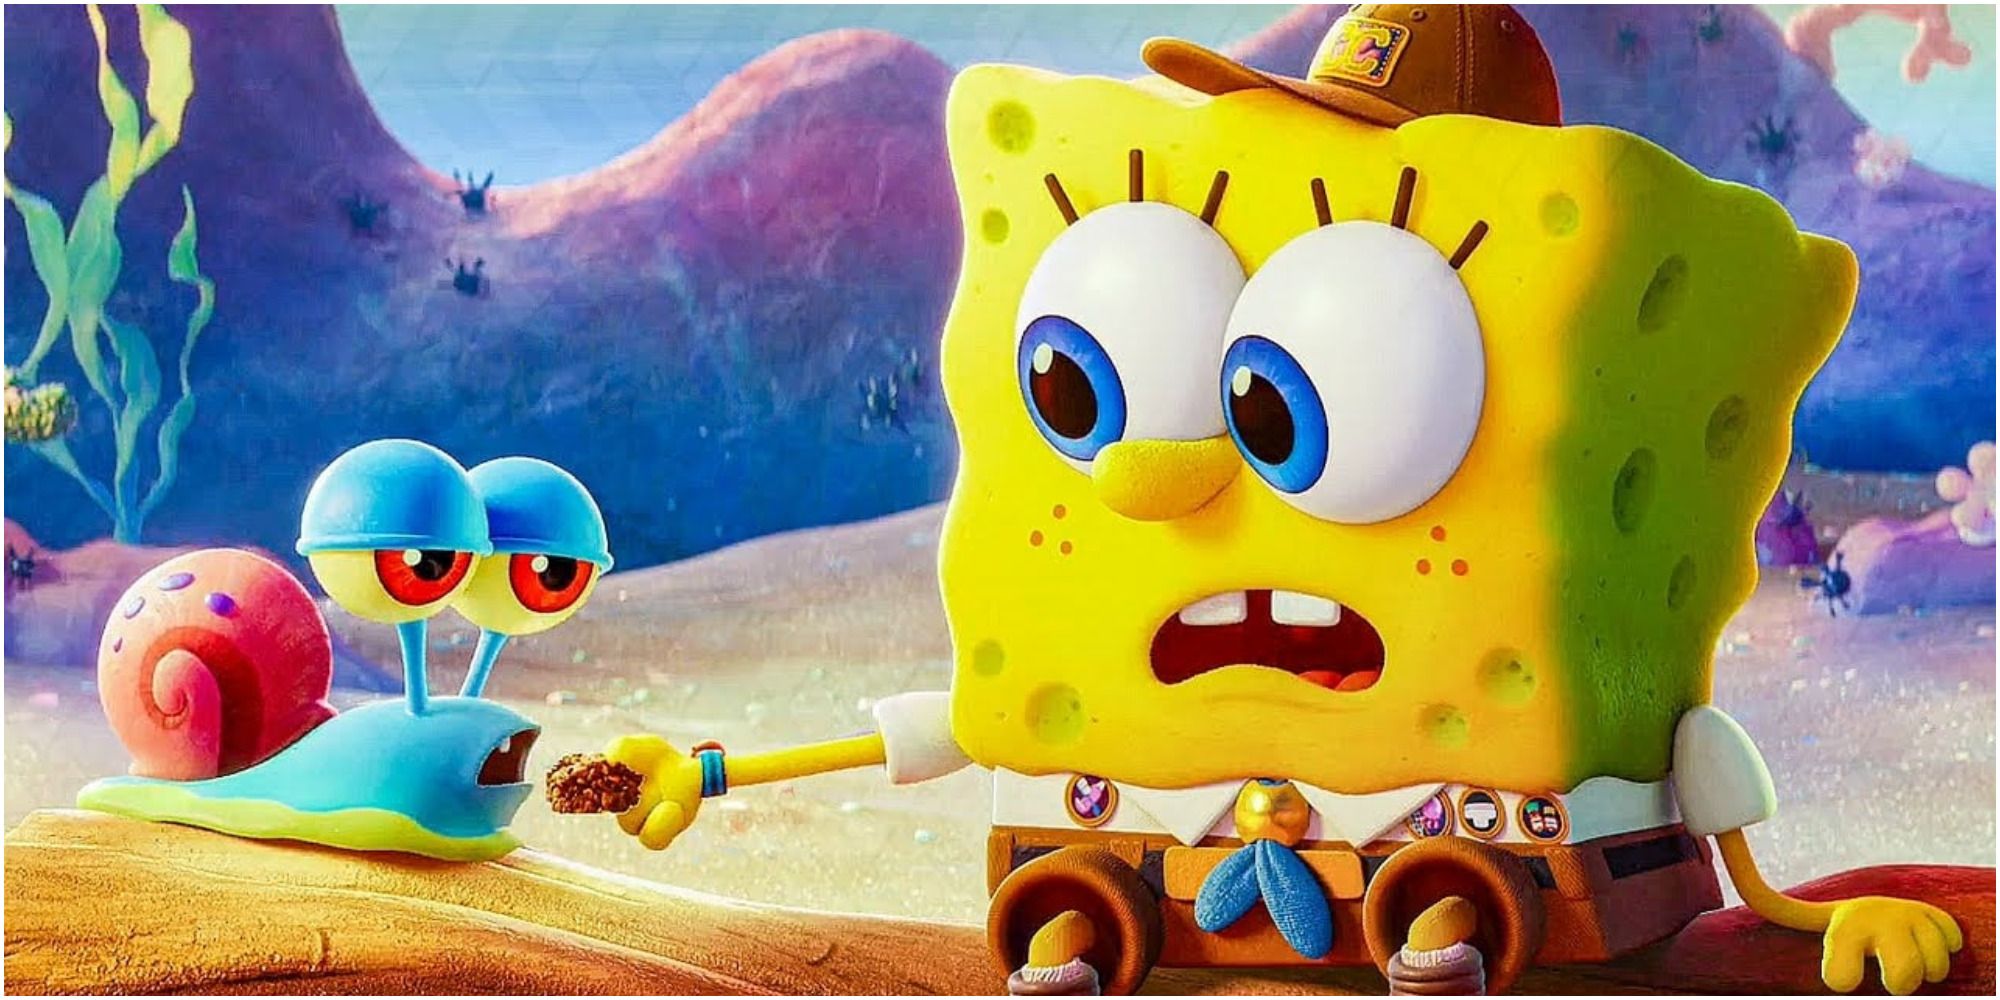 The Spongebob Movie - Sponge on the Run